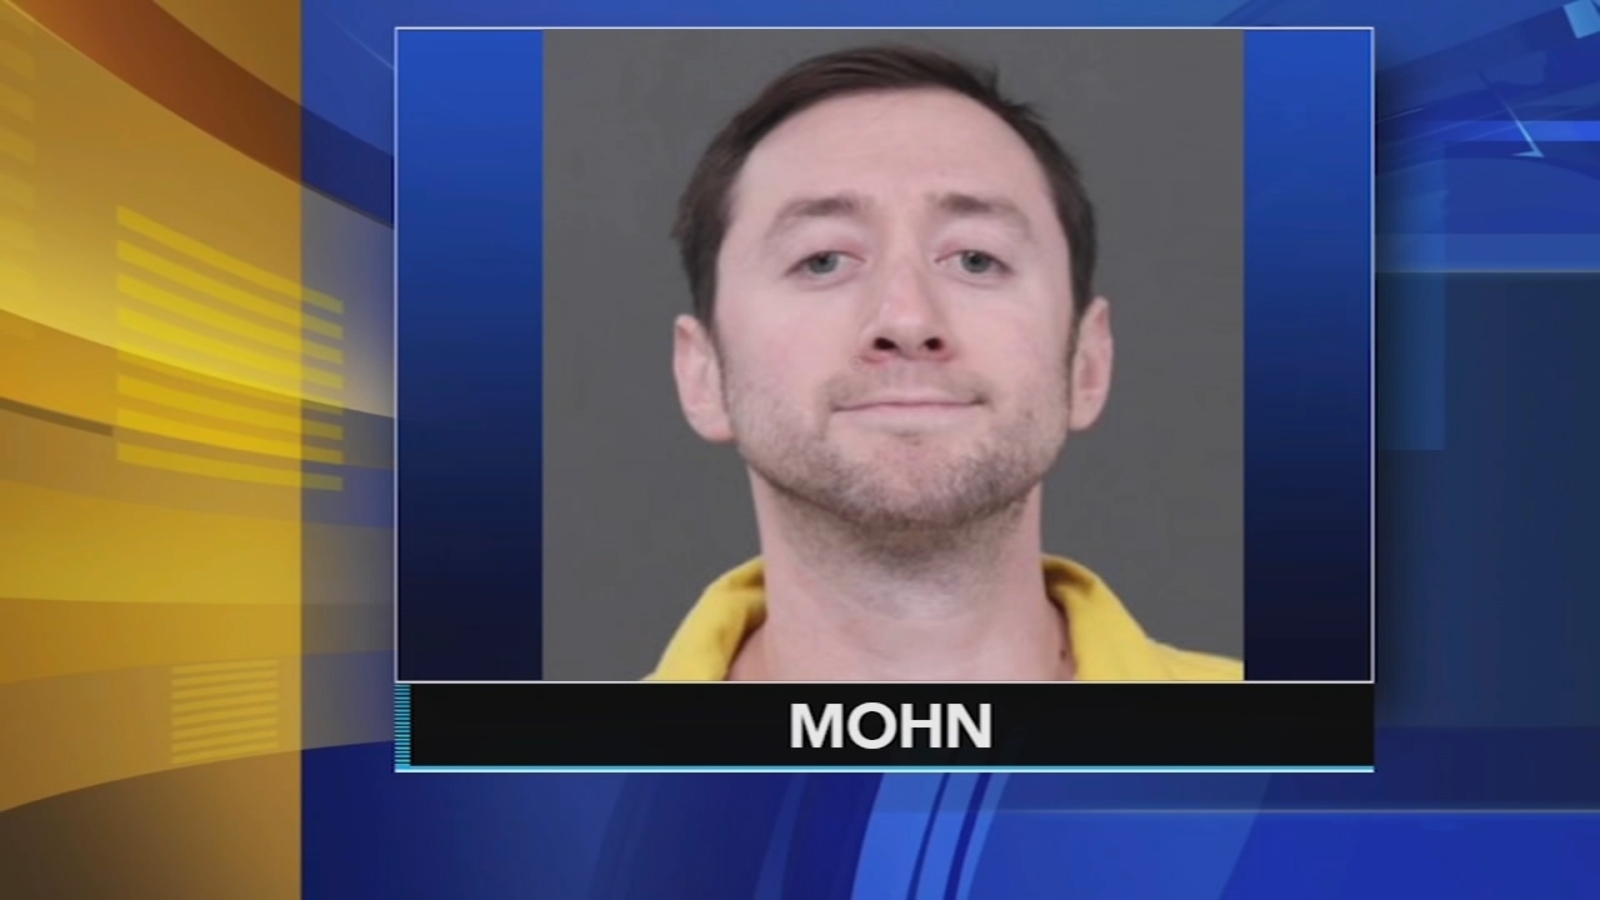 Pennsylvania beheading: Neighbors say Justin Mohn, Bucks County man accused of killing father, was acting ‘strange’